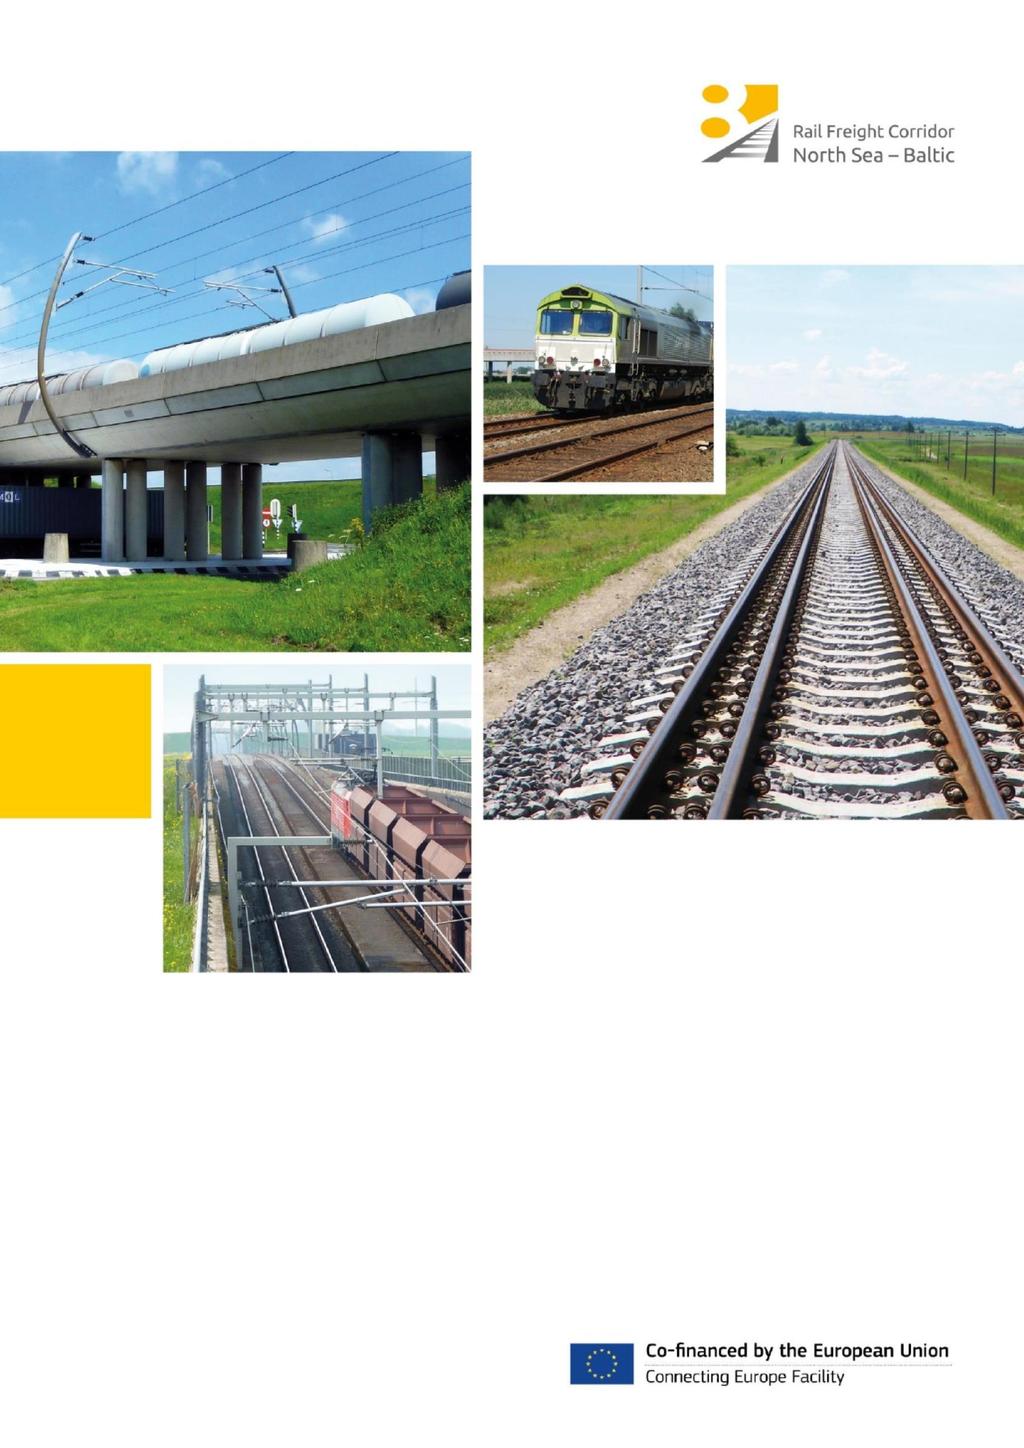 Rail Freight Corridor North Sea - Baltic Corridor